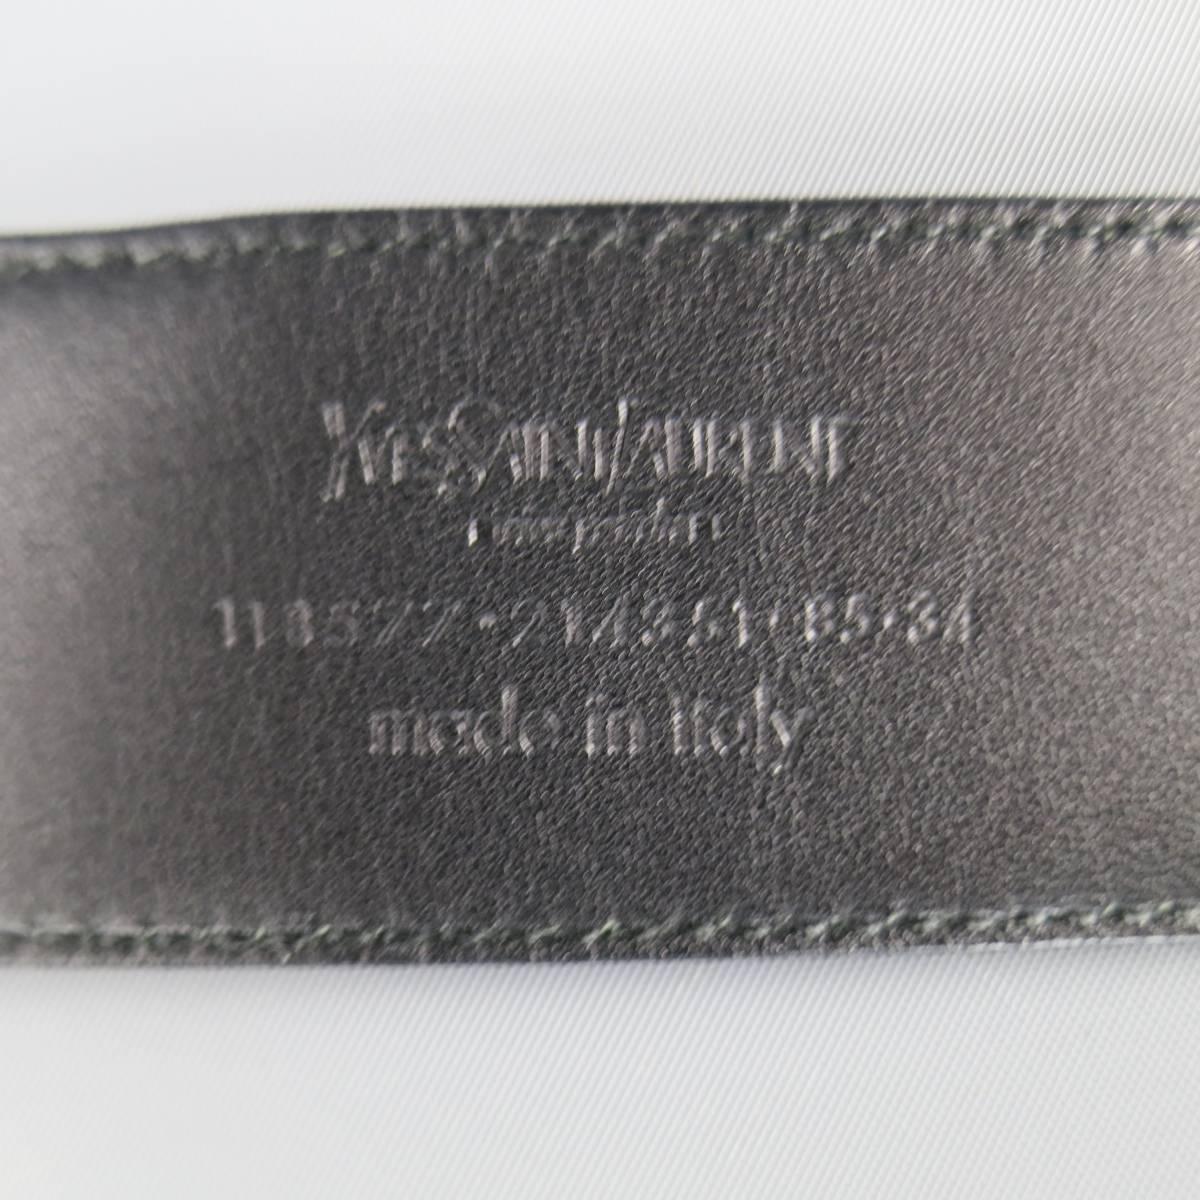 ysl logo belt buckle